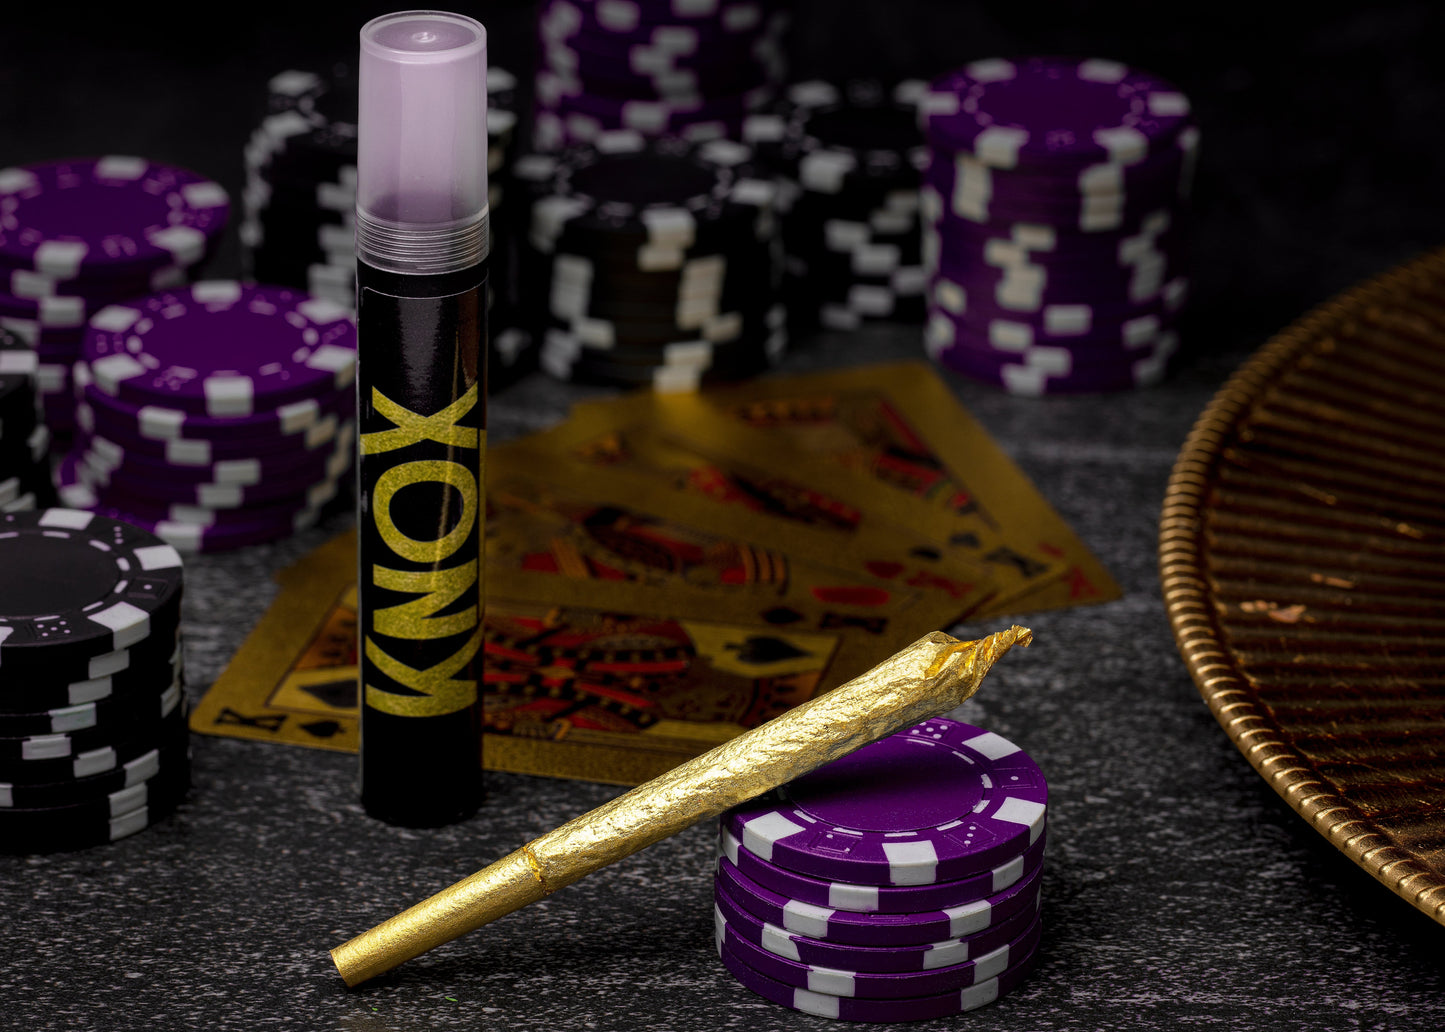 Knox 24K Gold King Size Cone Smoke Drop 